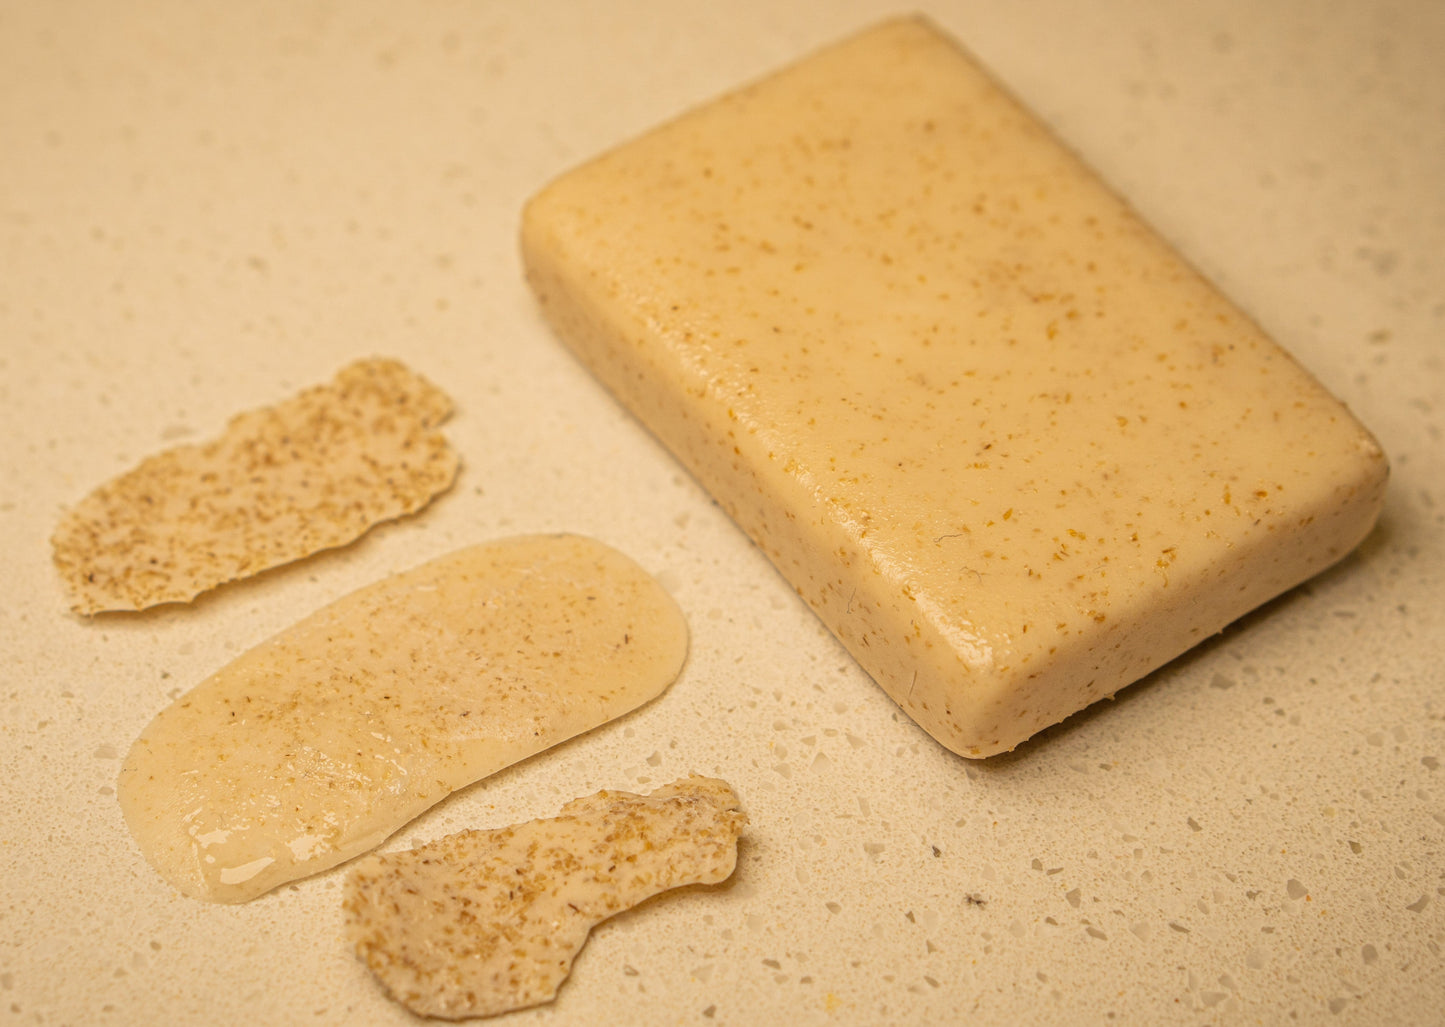 Oatmeal Exfoliating Soap